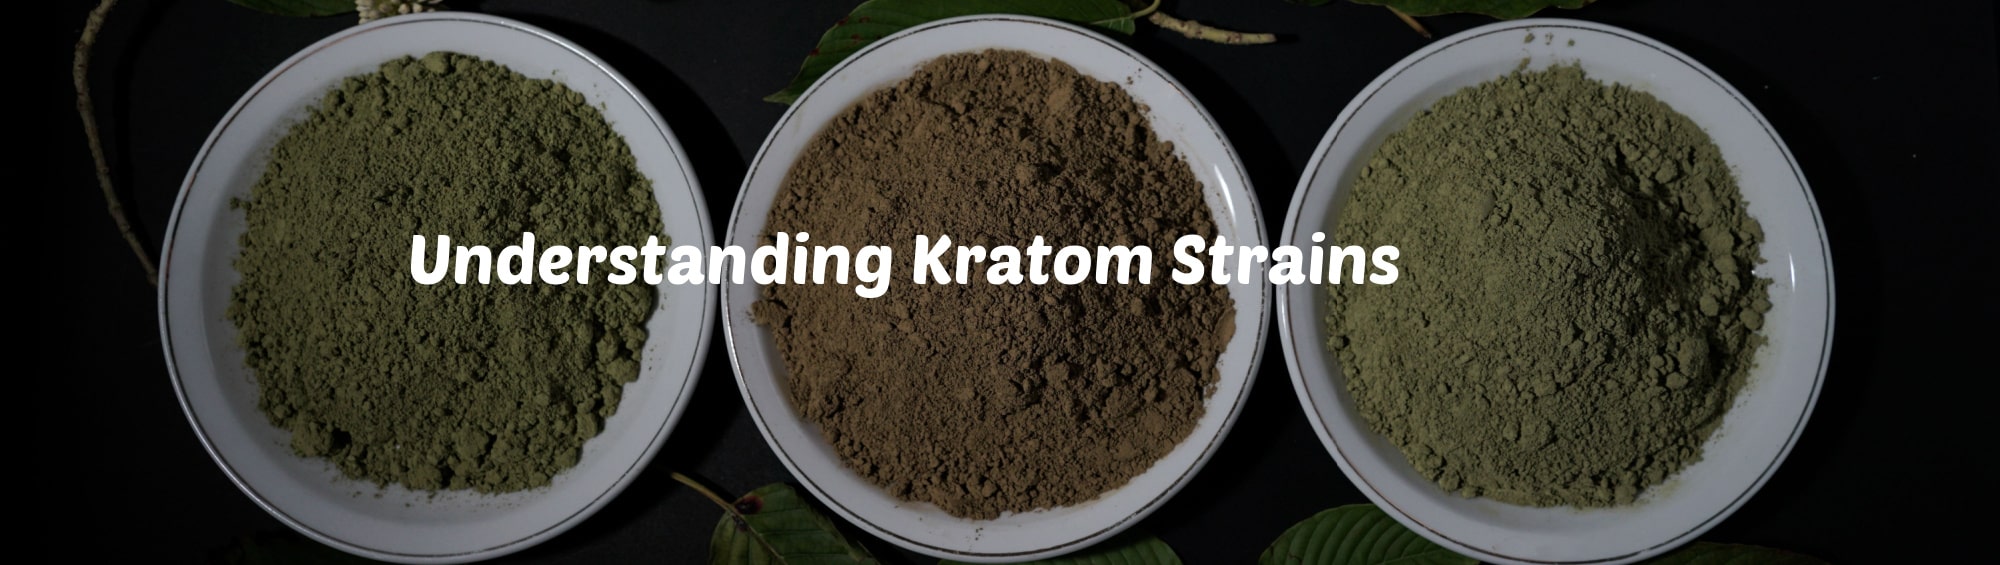 image of understanding kratom strains